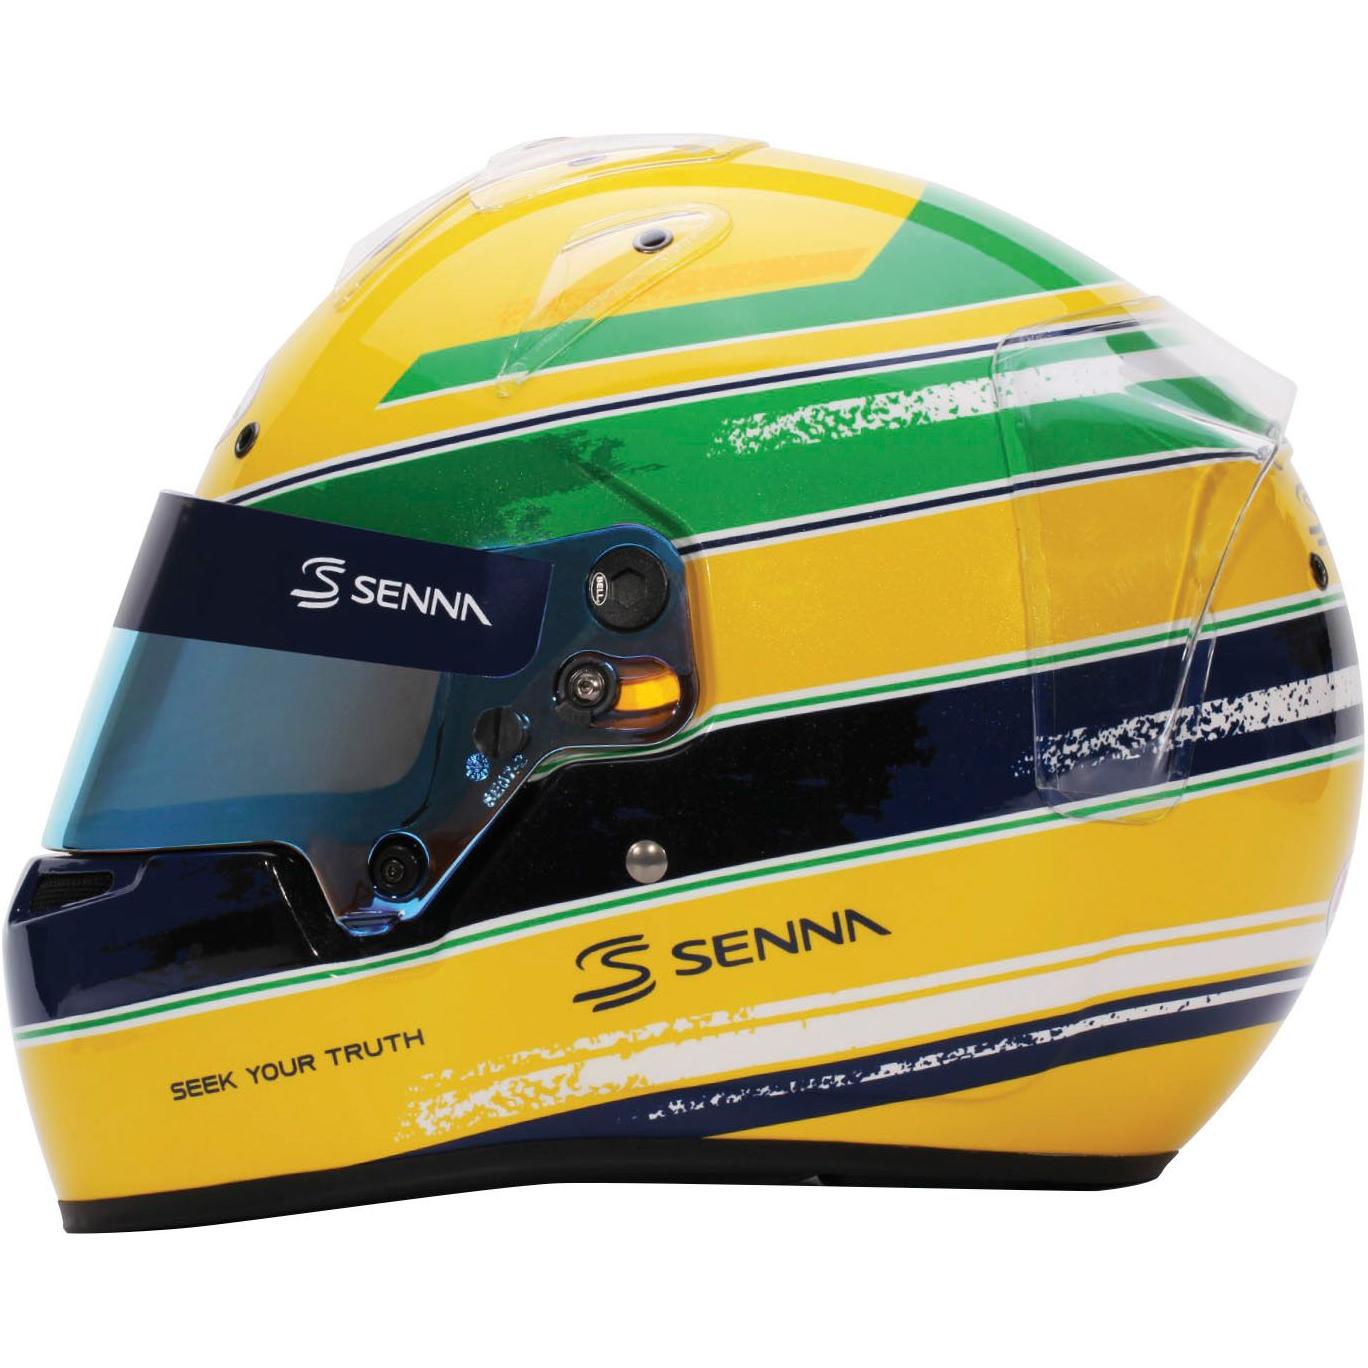 BELL Hjälm KC7 CMR Ayrton Senna